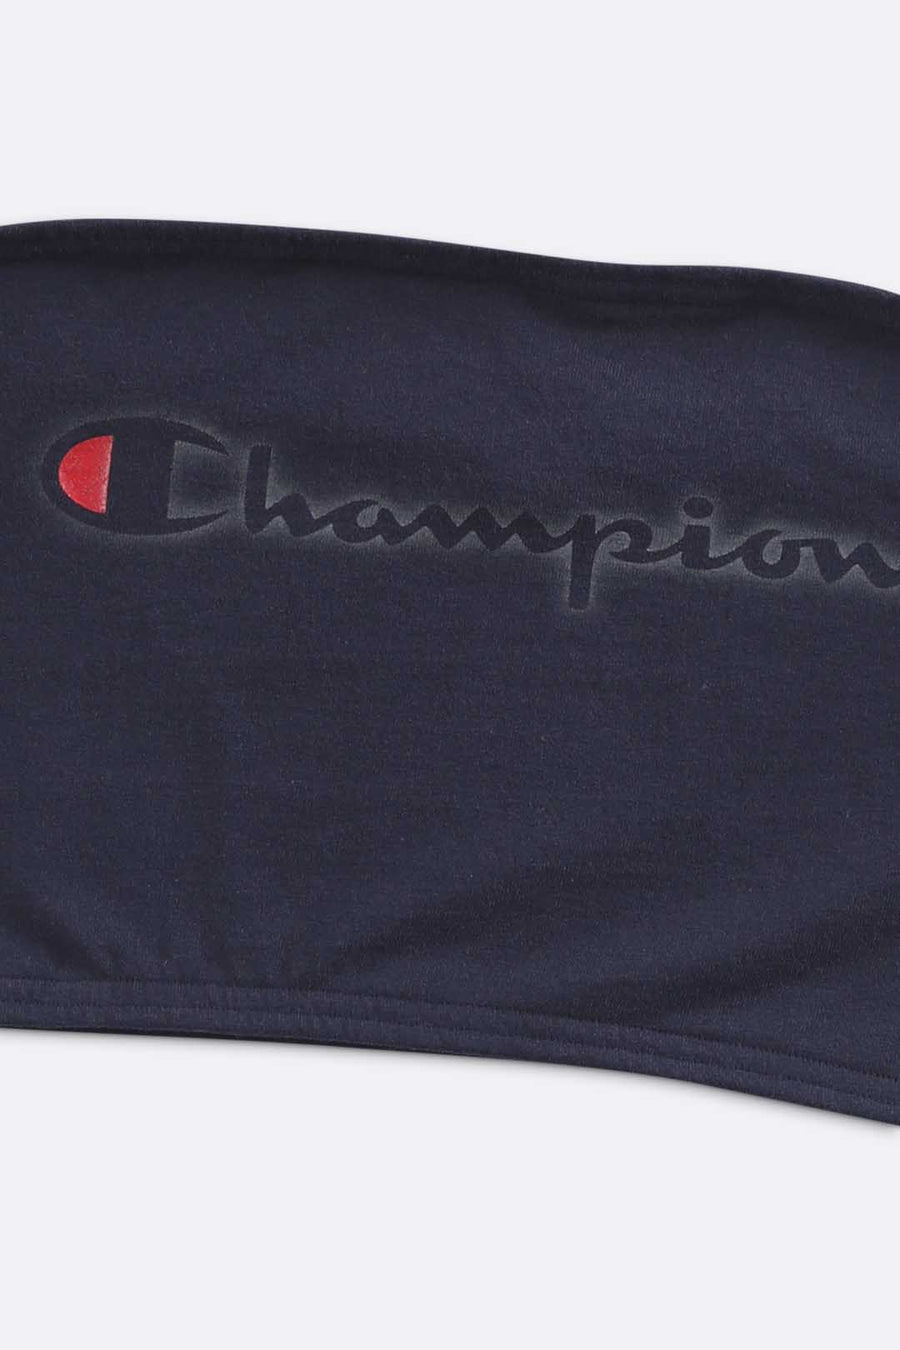 Rework Champion Bandeau - XL